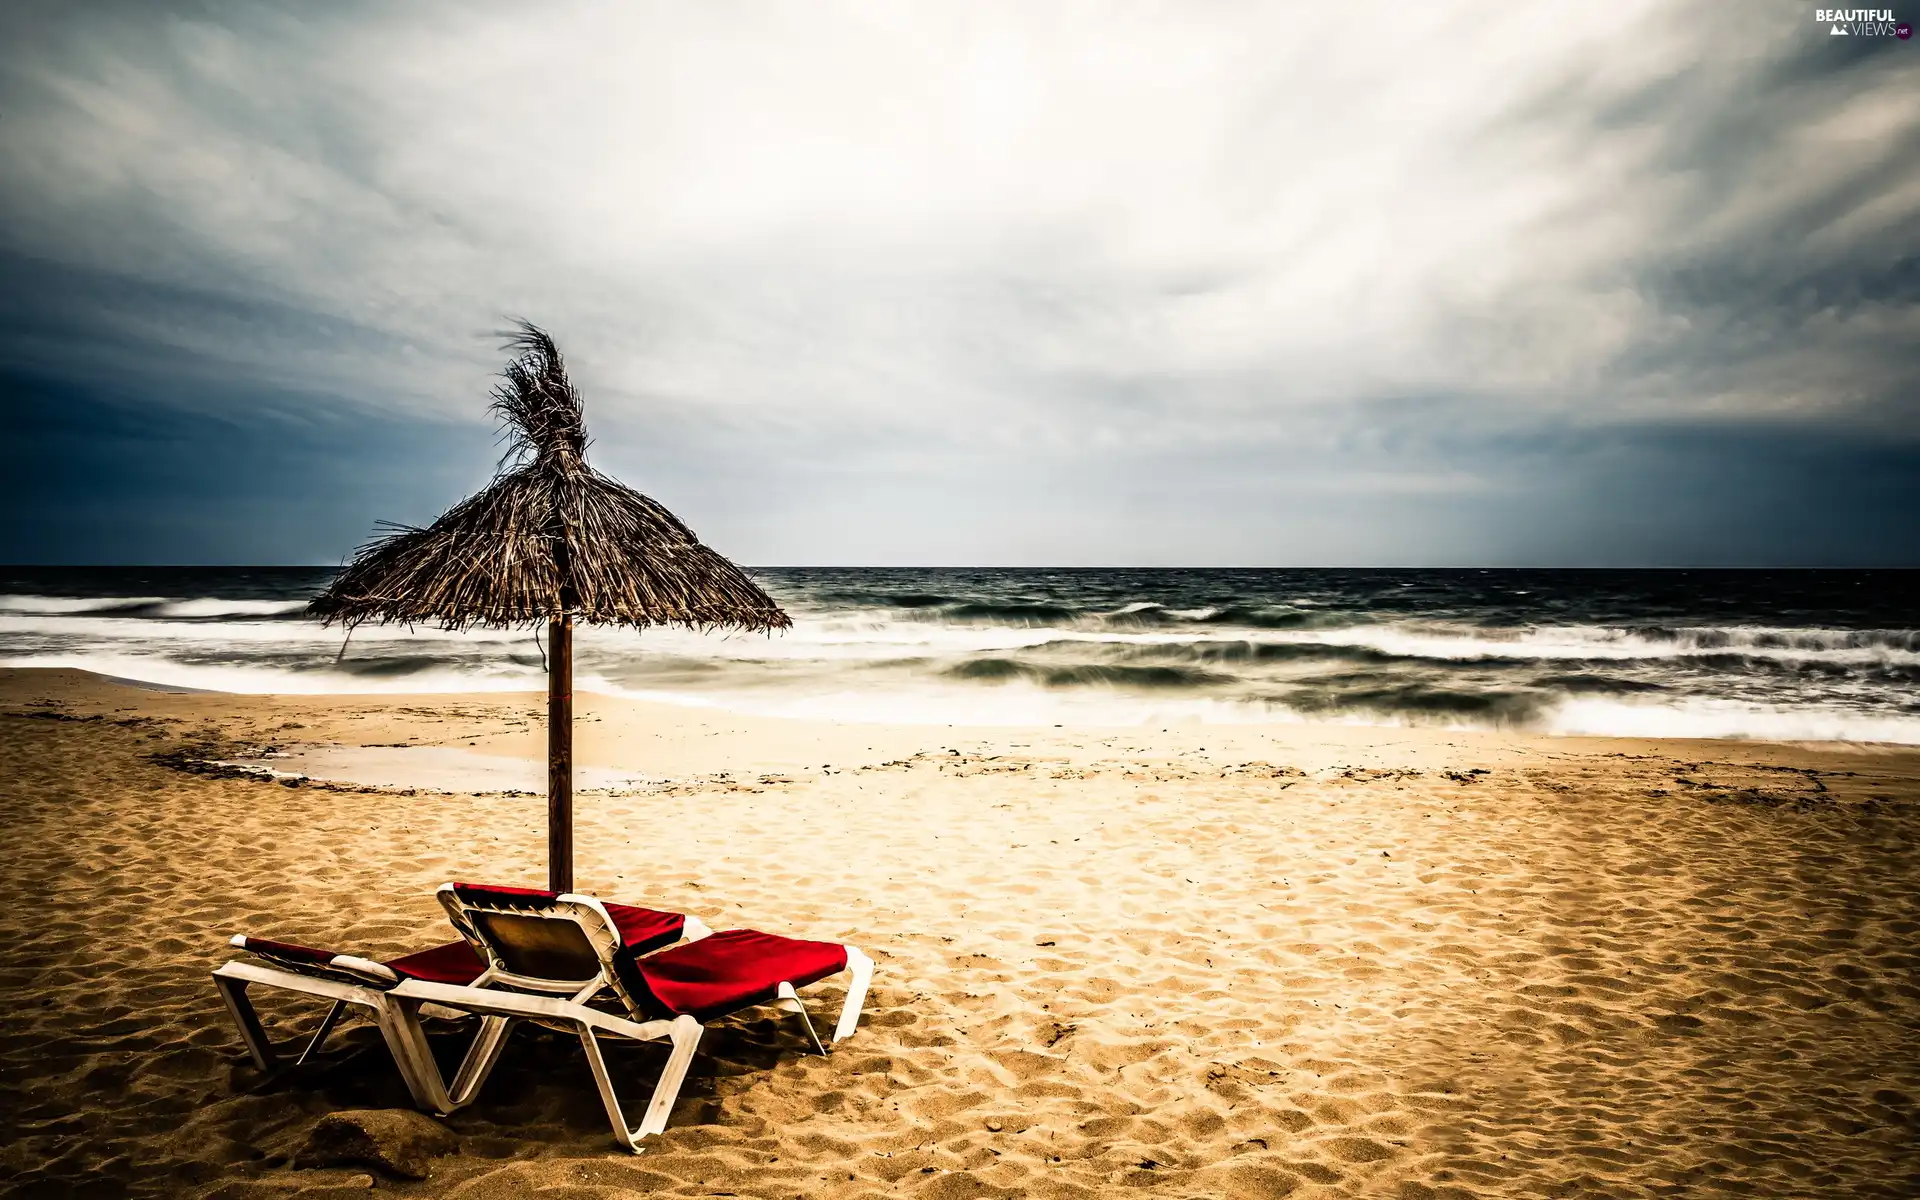 Beaches, sun, Umbrella, sea, west, deck chair, holiday